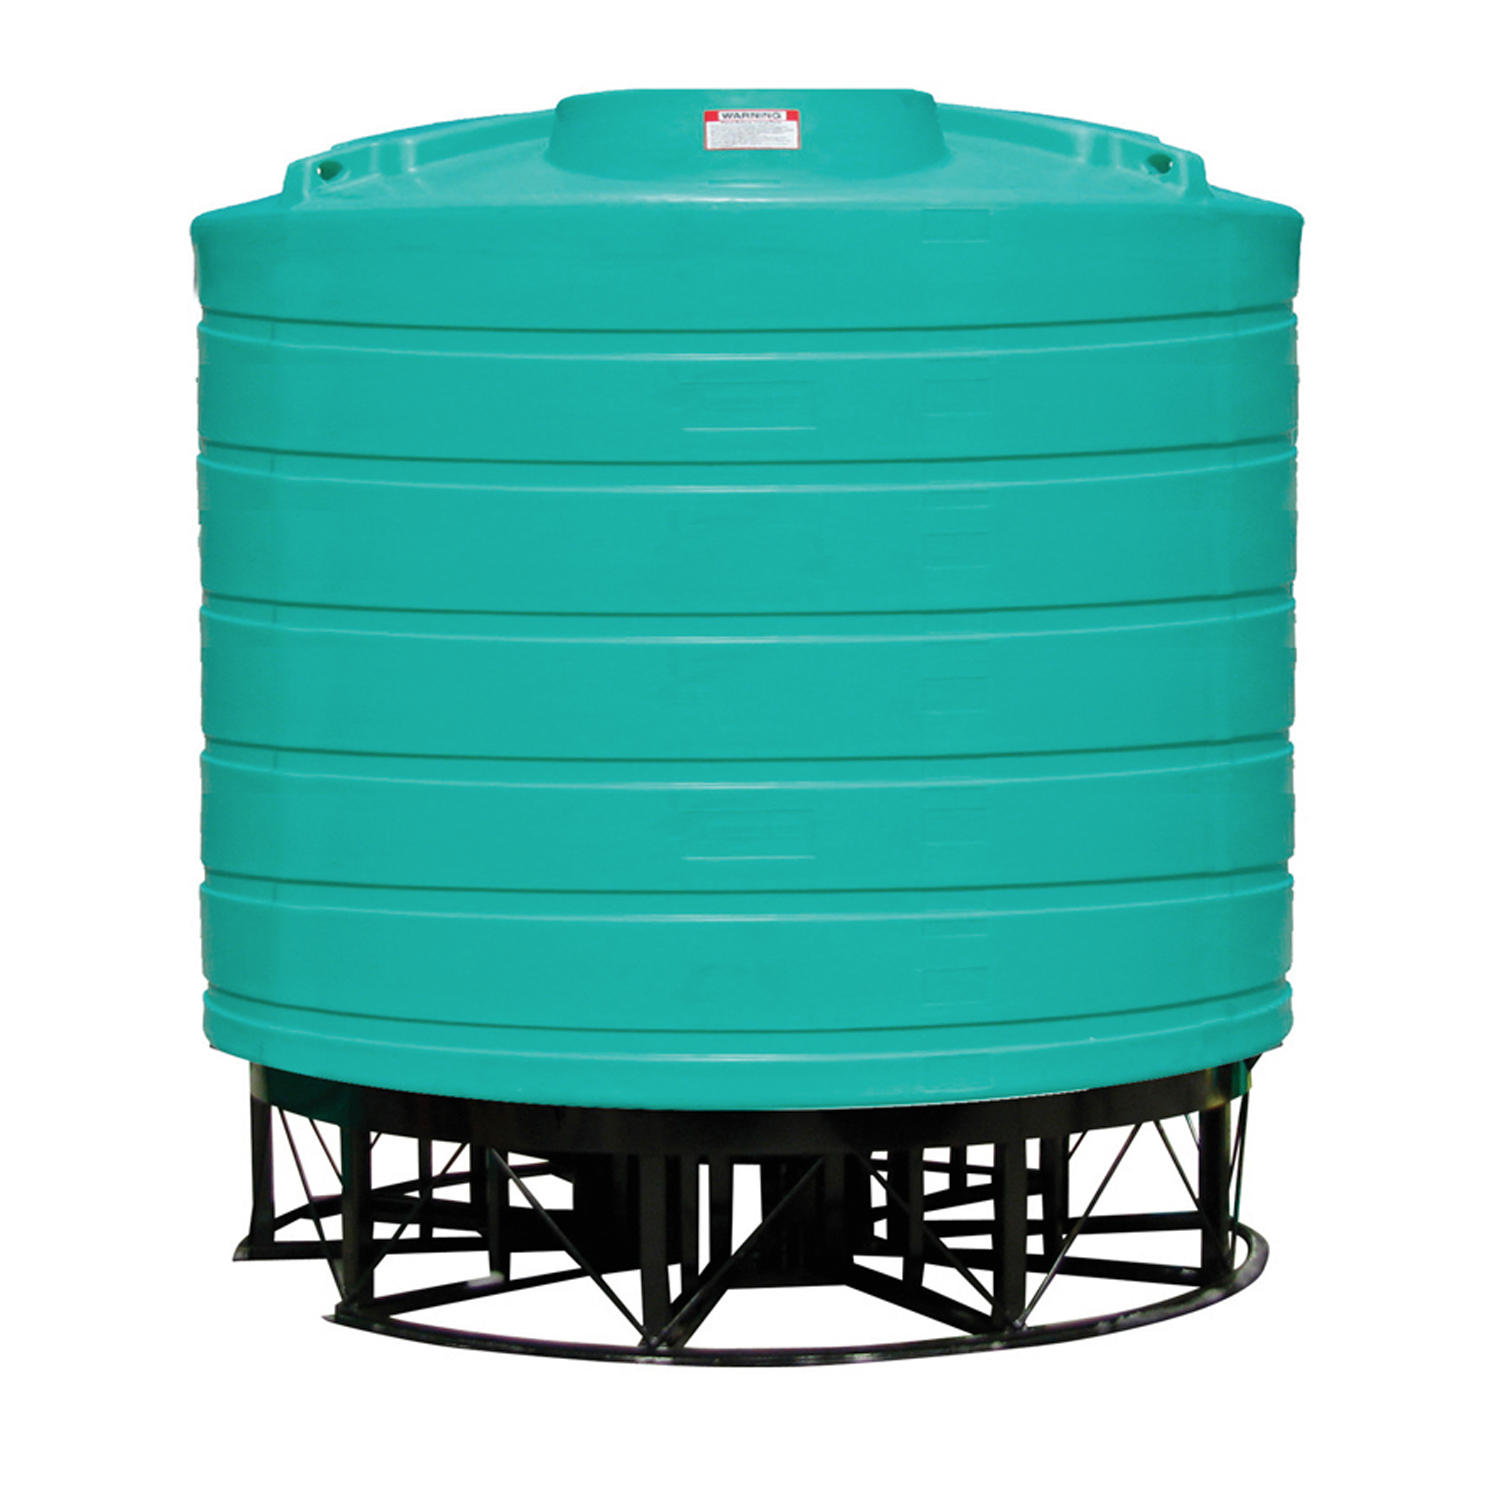 Enduraplas 3,200 Gallon Cone Bottom Storage Tank